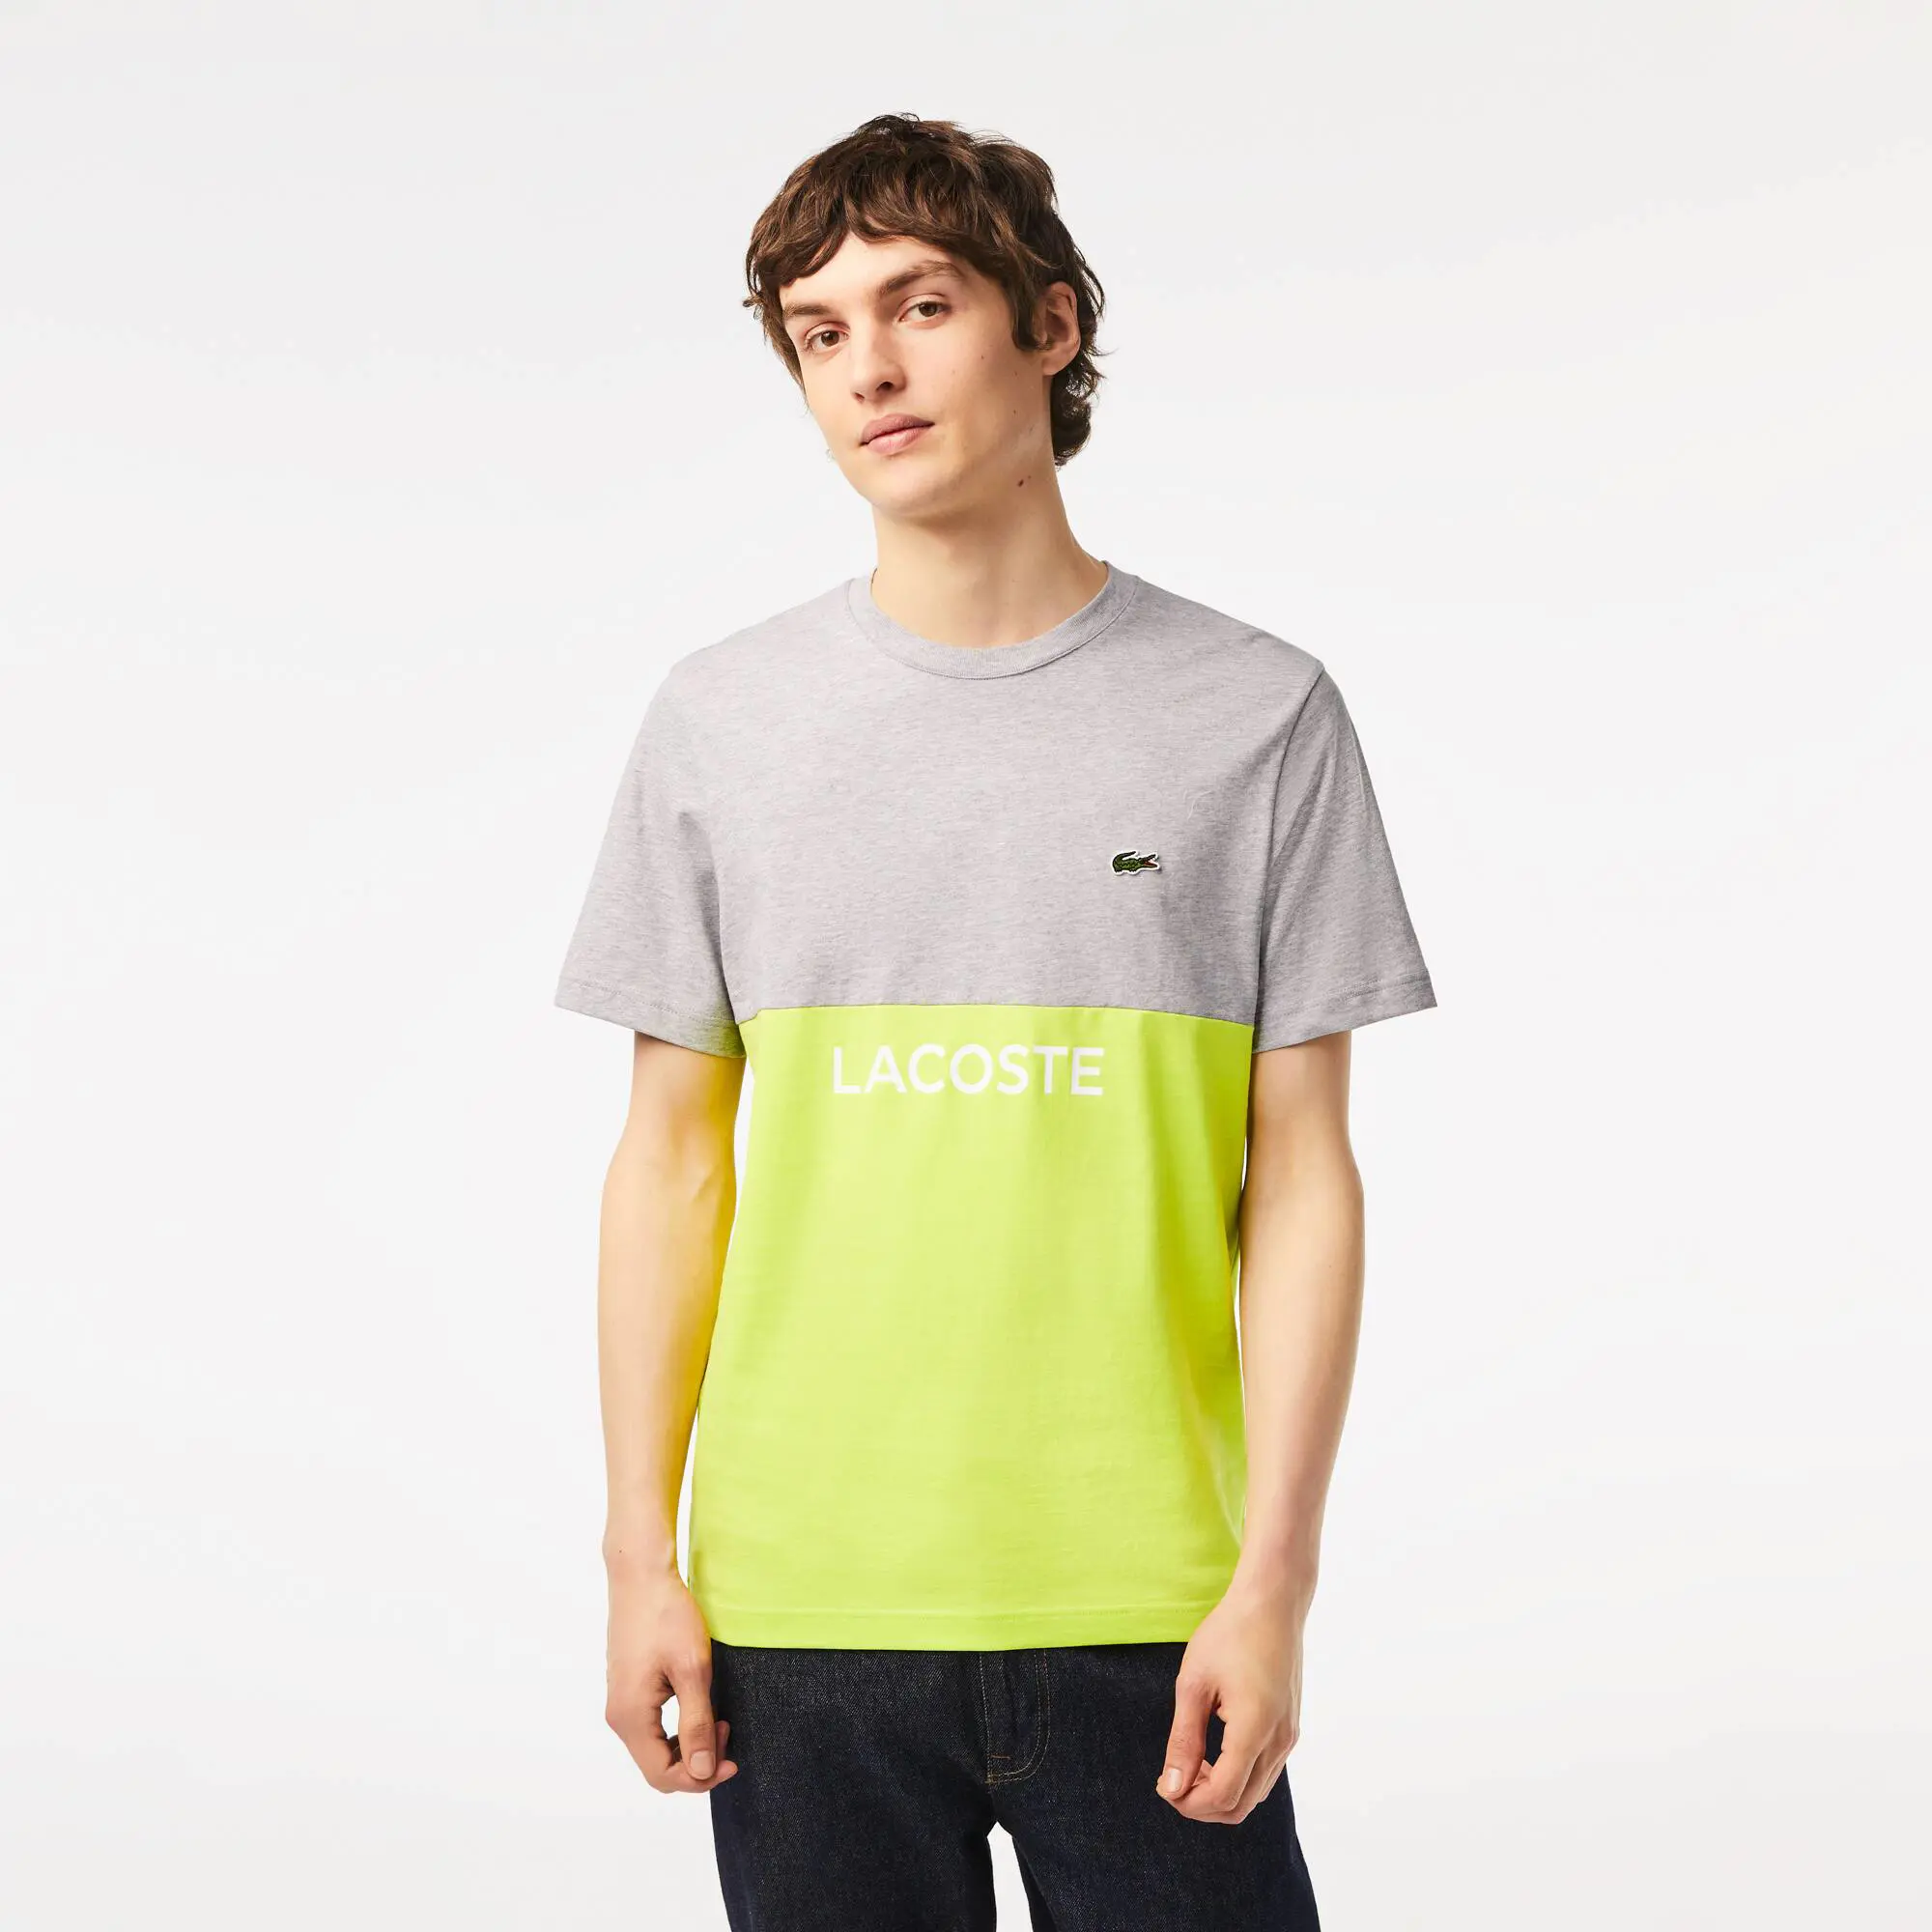 Lacoste T-shirt jersey regular fit de algodão Lacoste Colorblock para homem. 1